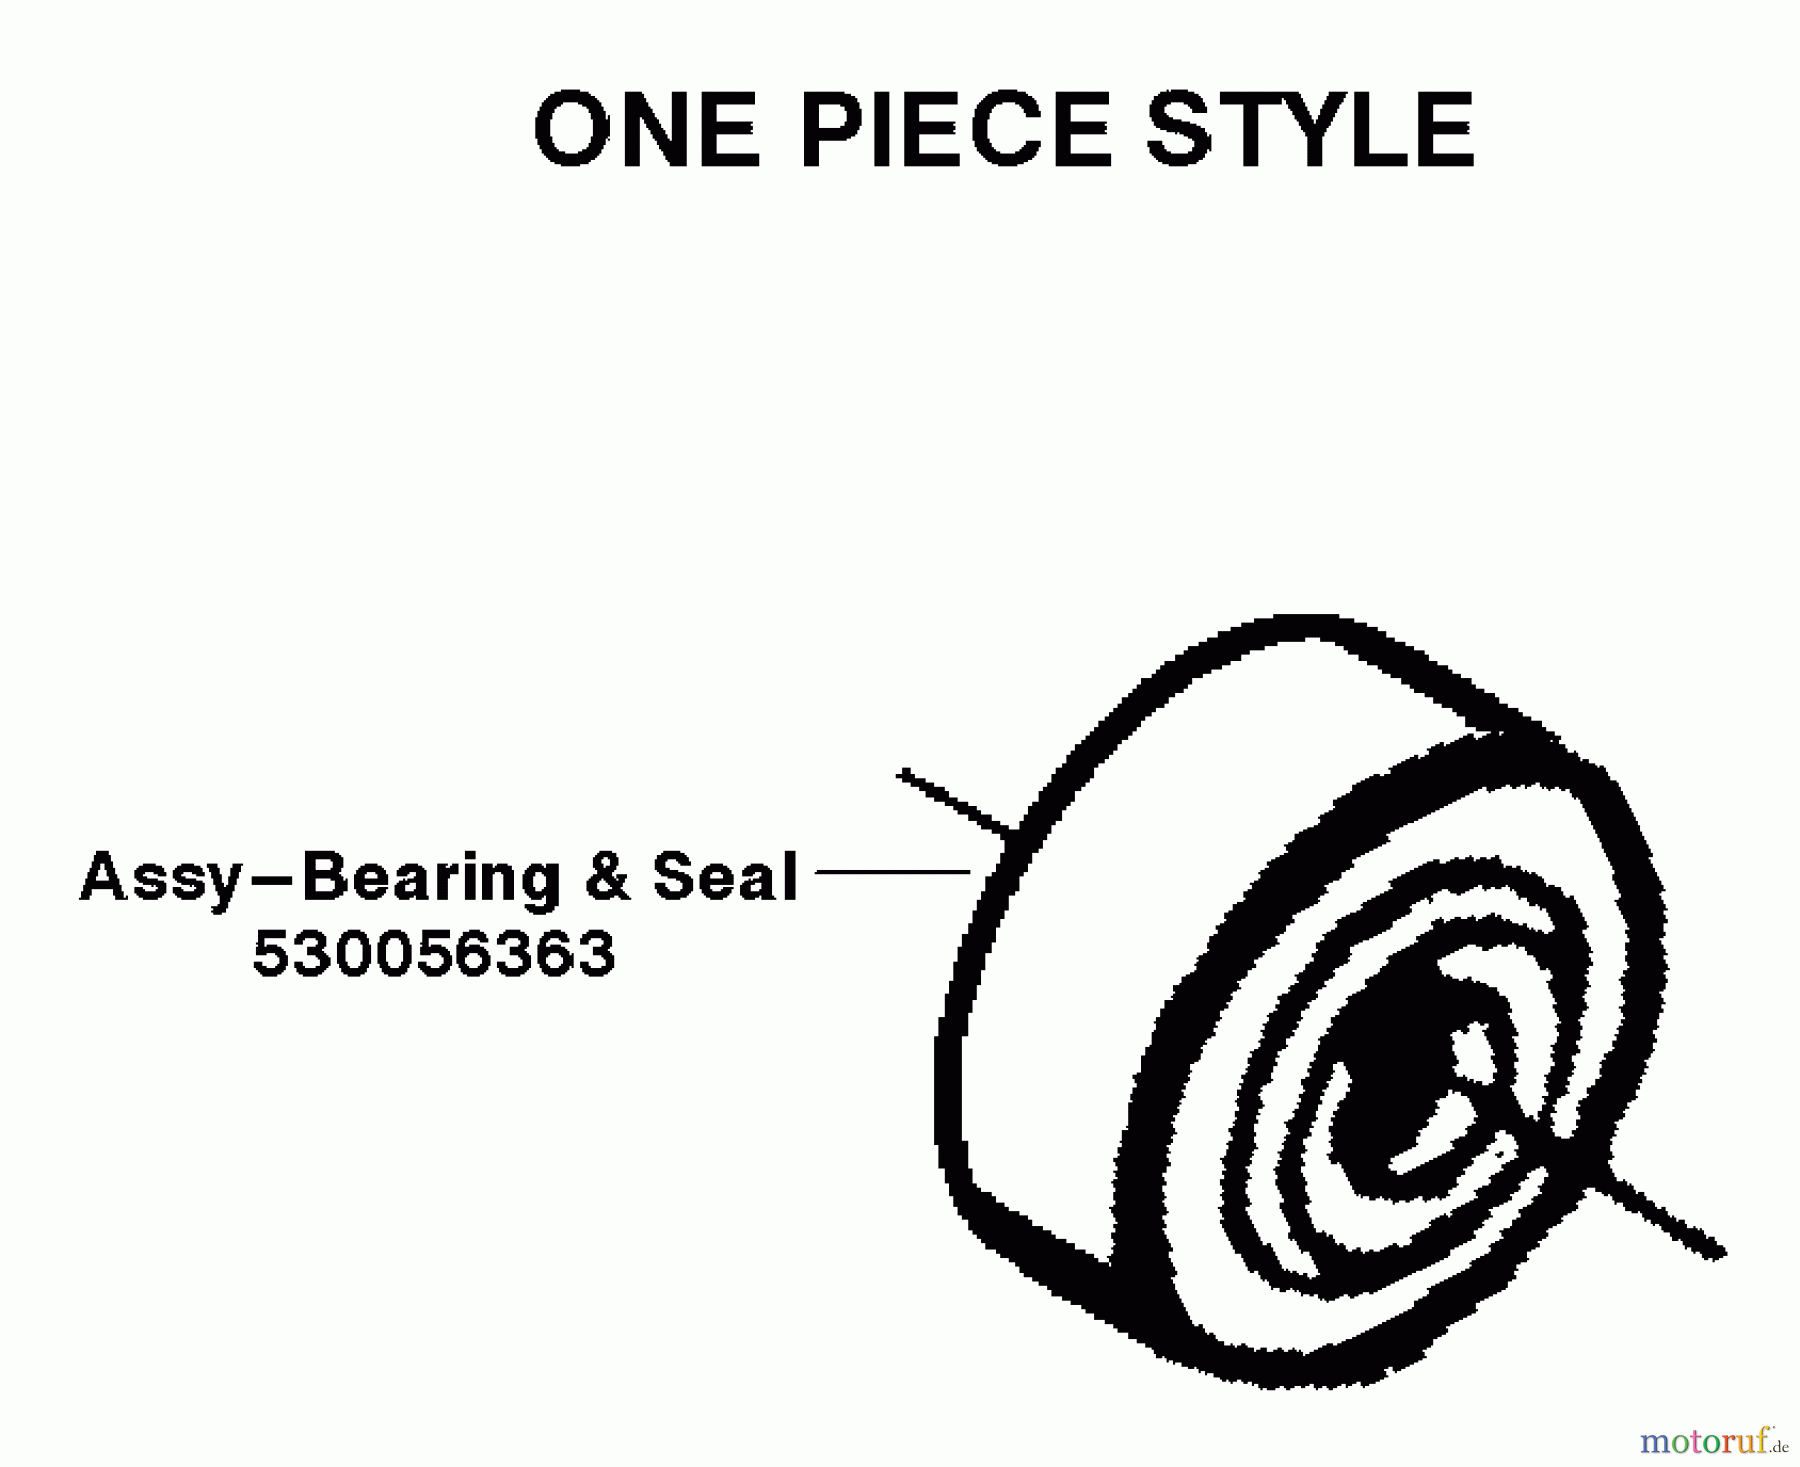  Poulan / Weed Eater Motorsägen 2900 (Type 1) - Poulan Chainsaw Bearing & Seal - One Piece Style